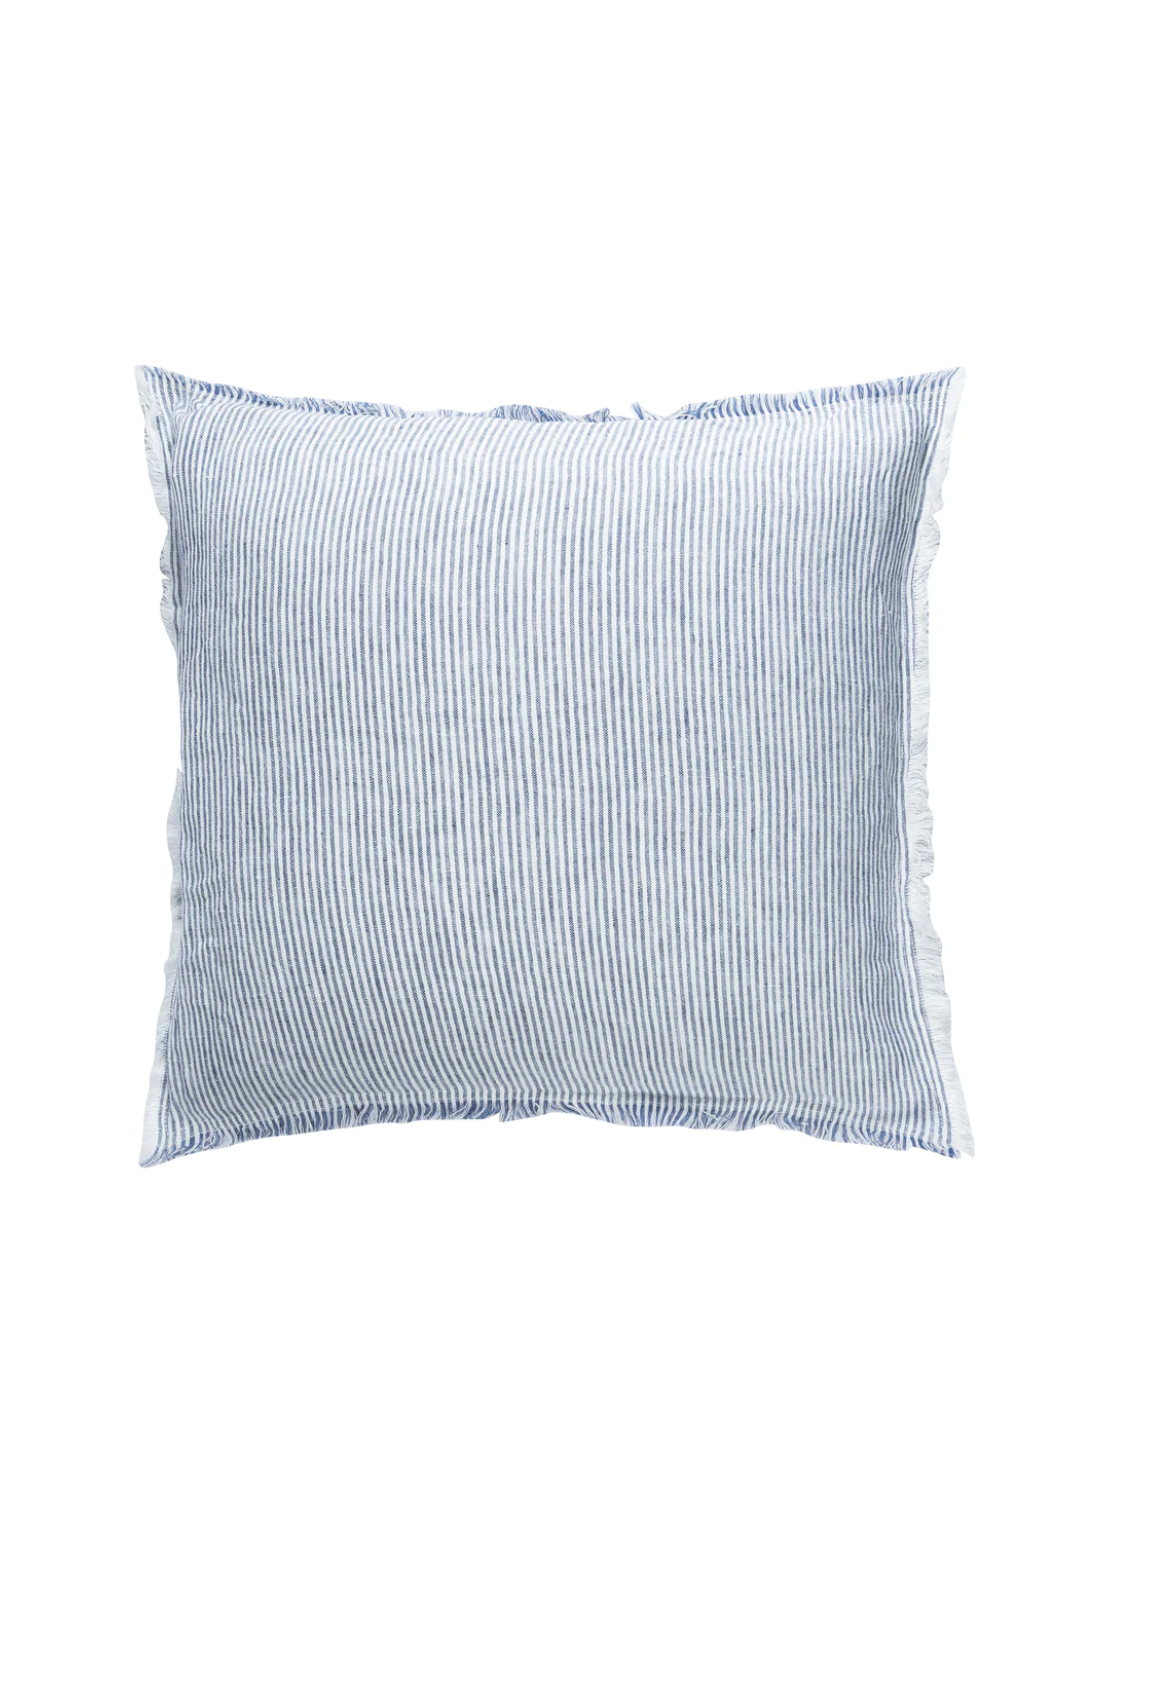 Chambray Blue & White Linen Pillows